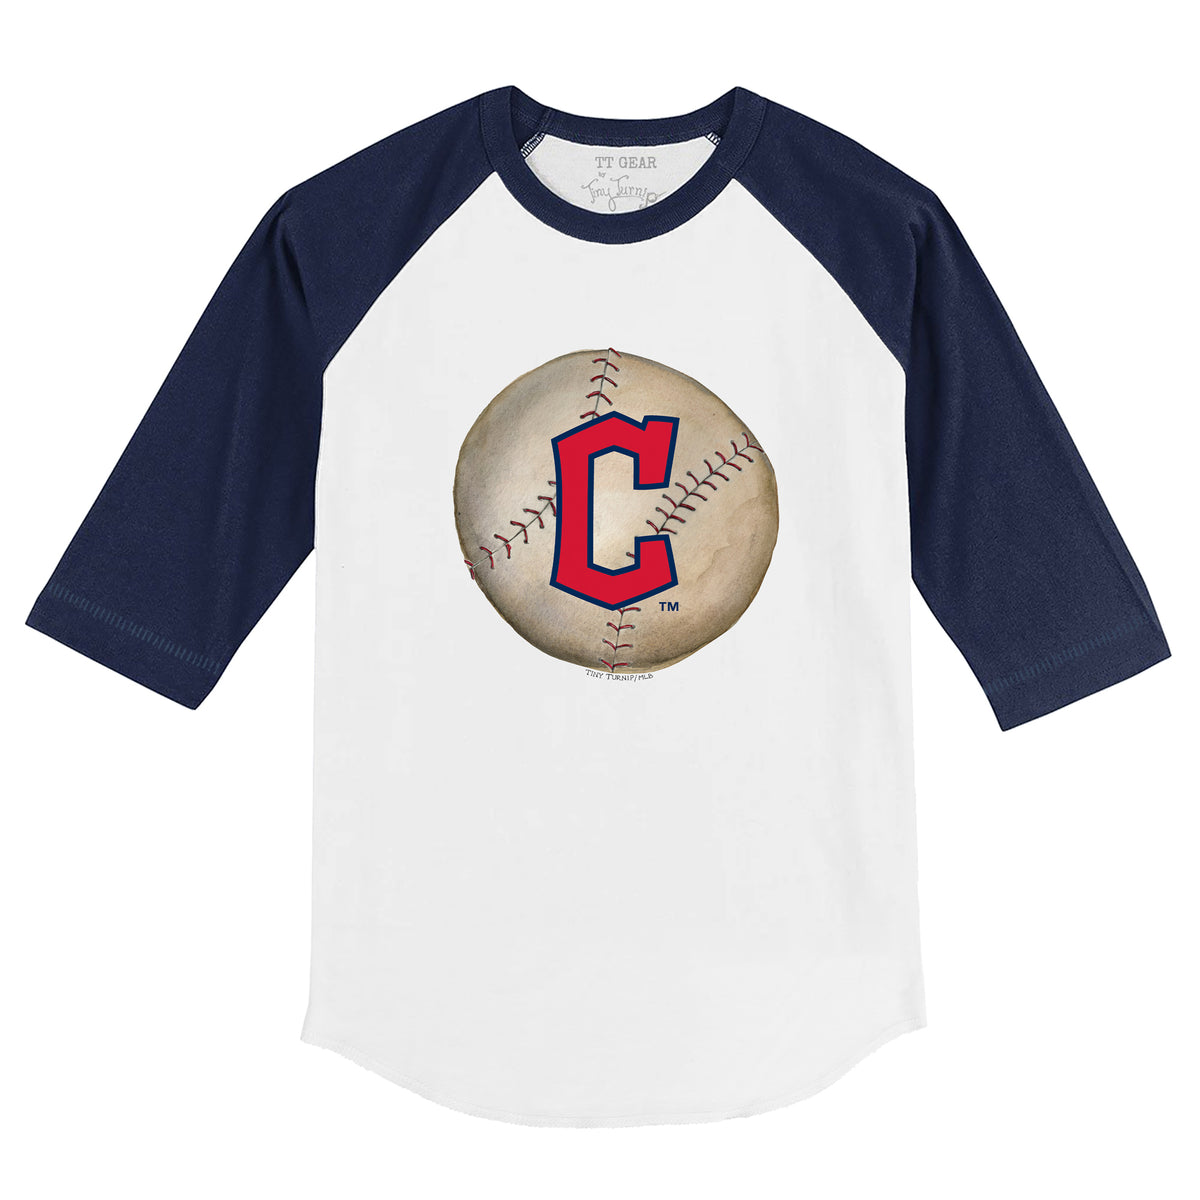 Stitches Youth Boys Navy, White Cleveland Indians Team T-shirt Combo Set